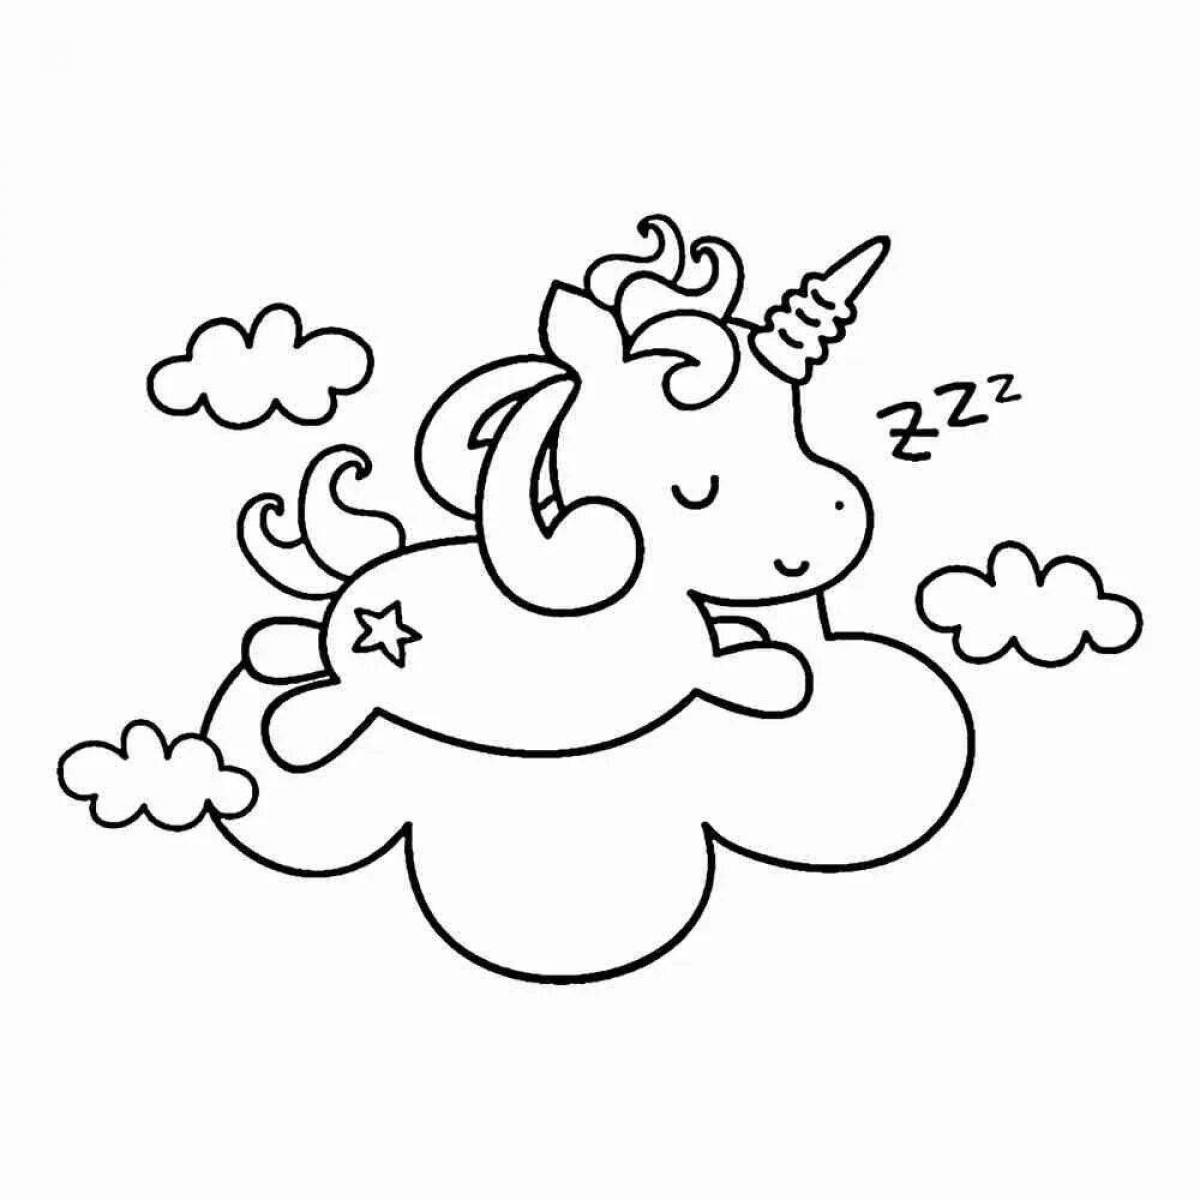 Unicorn cloud coloring page